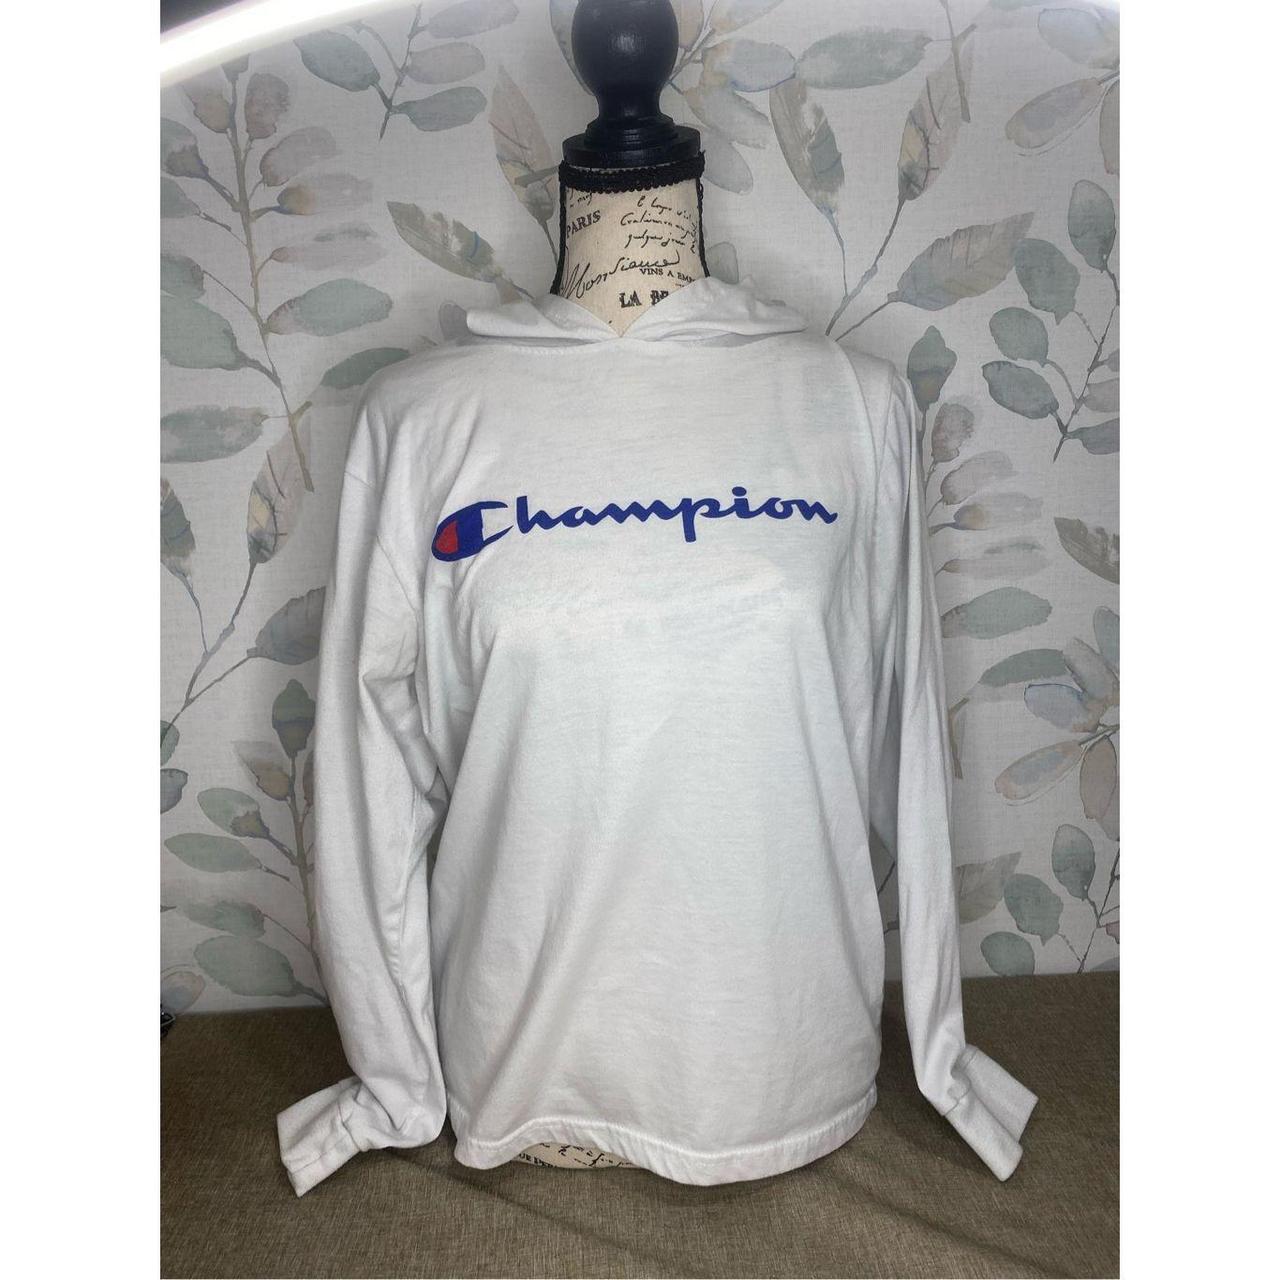 Pre-Owned Champion Women's Size M Sweatshirt